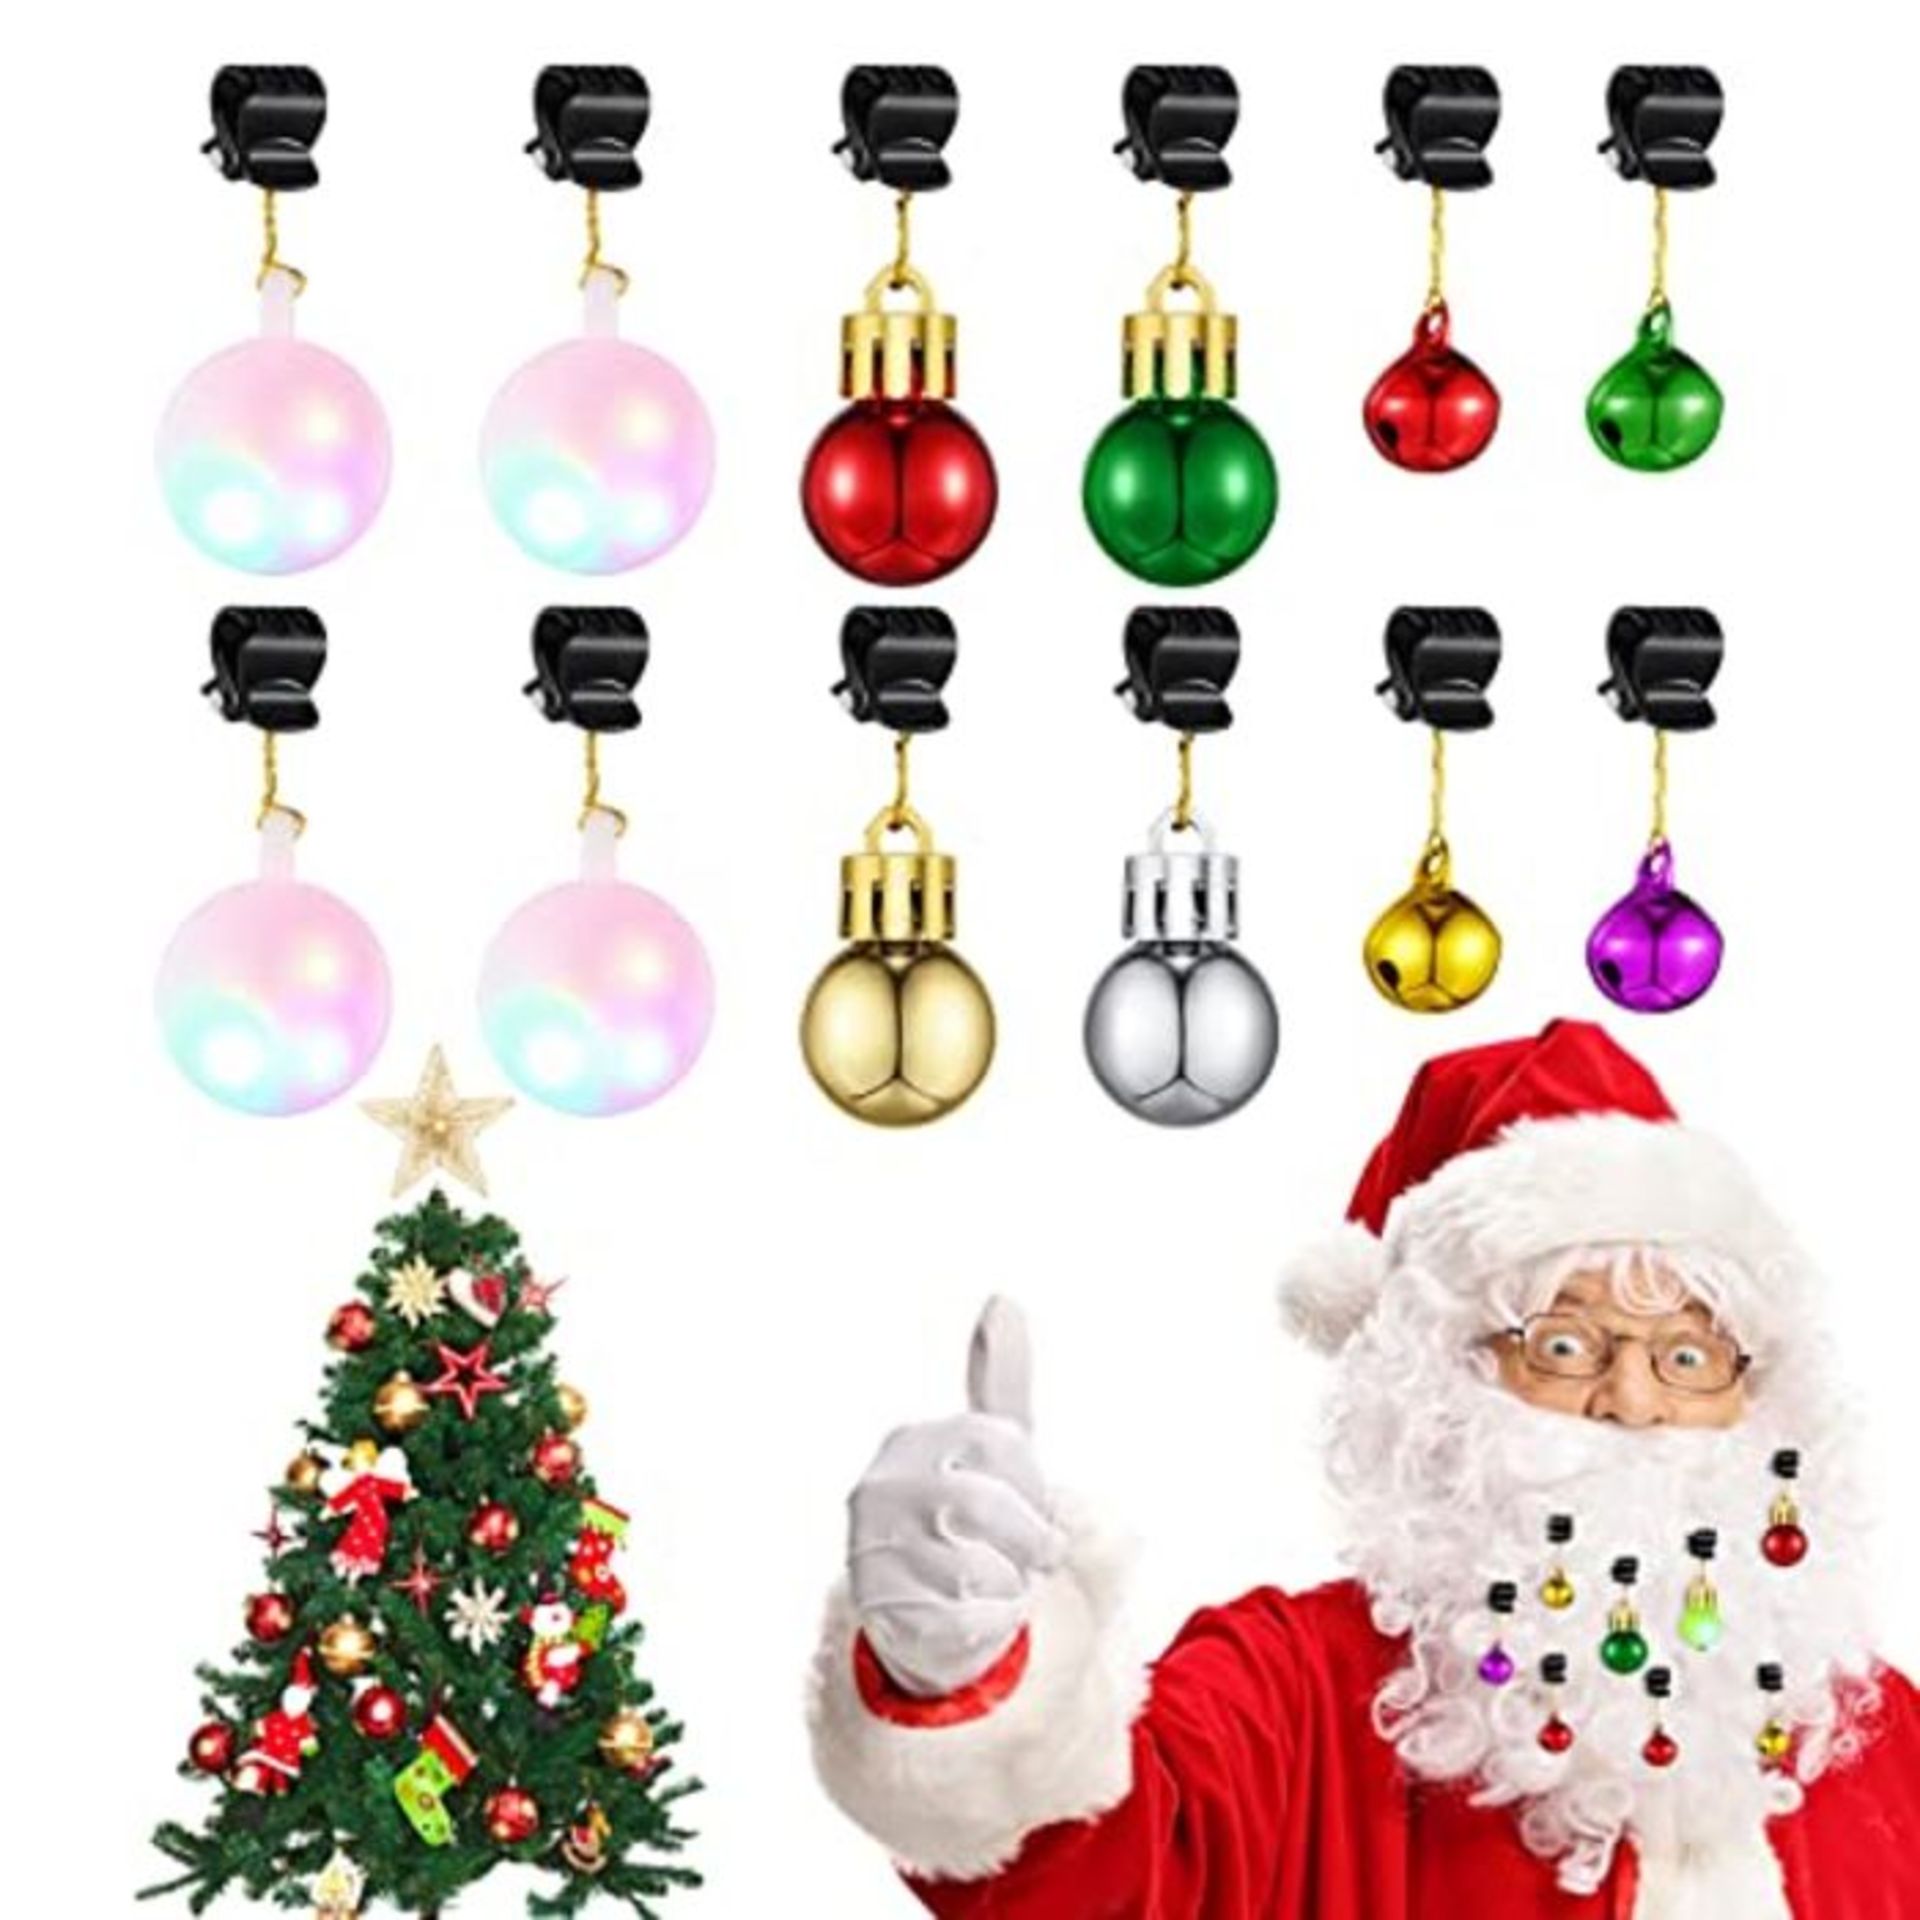 Christmas Light Beard Ornaments Set Lights Beard Bauble Ornaments Beard Ball Decor Col